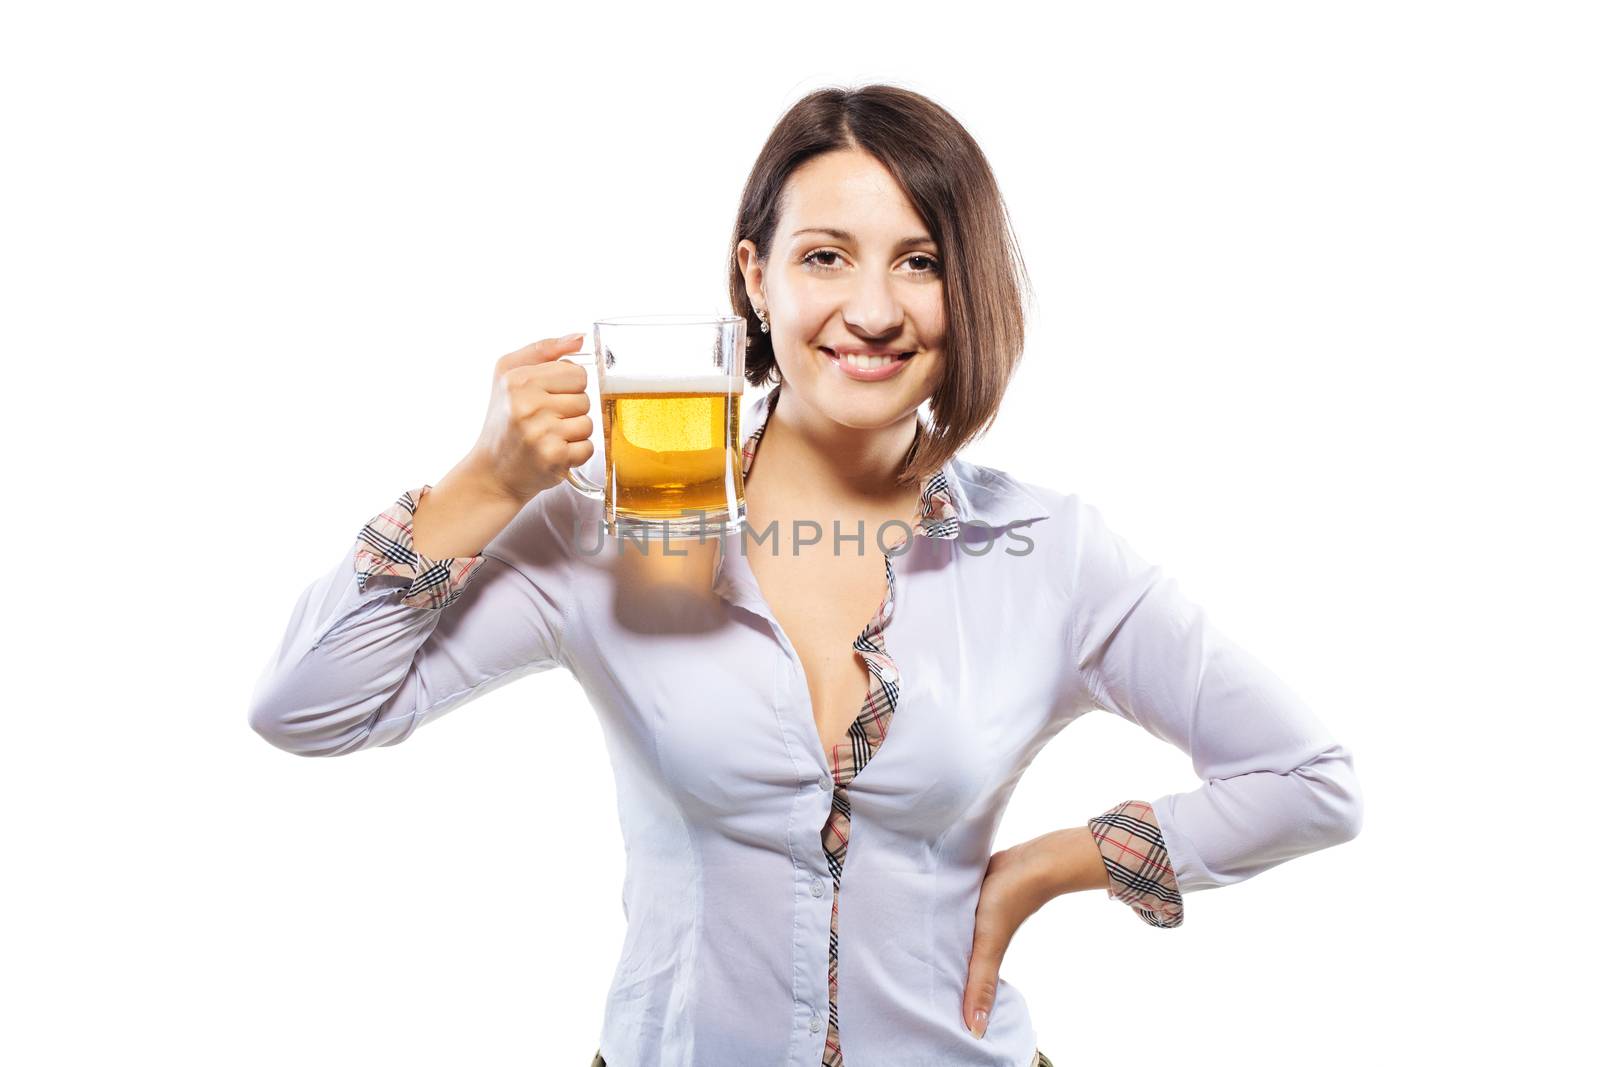 business girl holding beer glass against white background